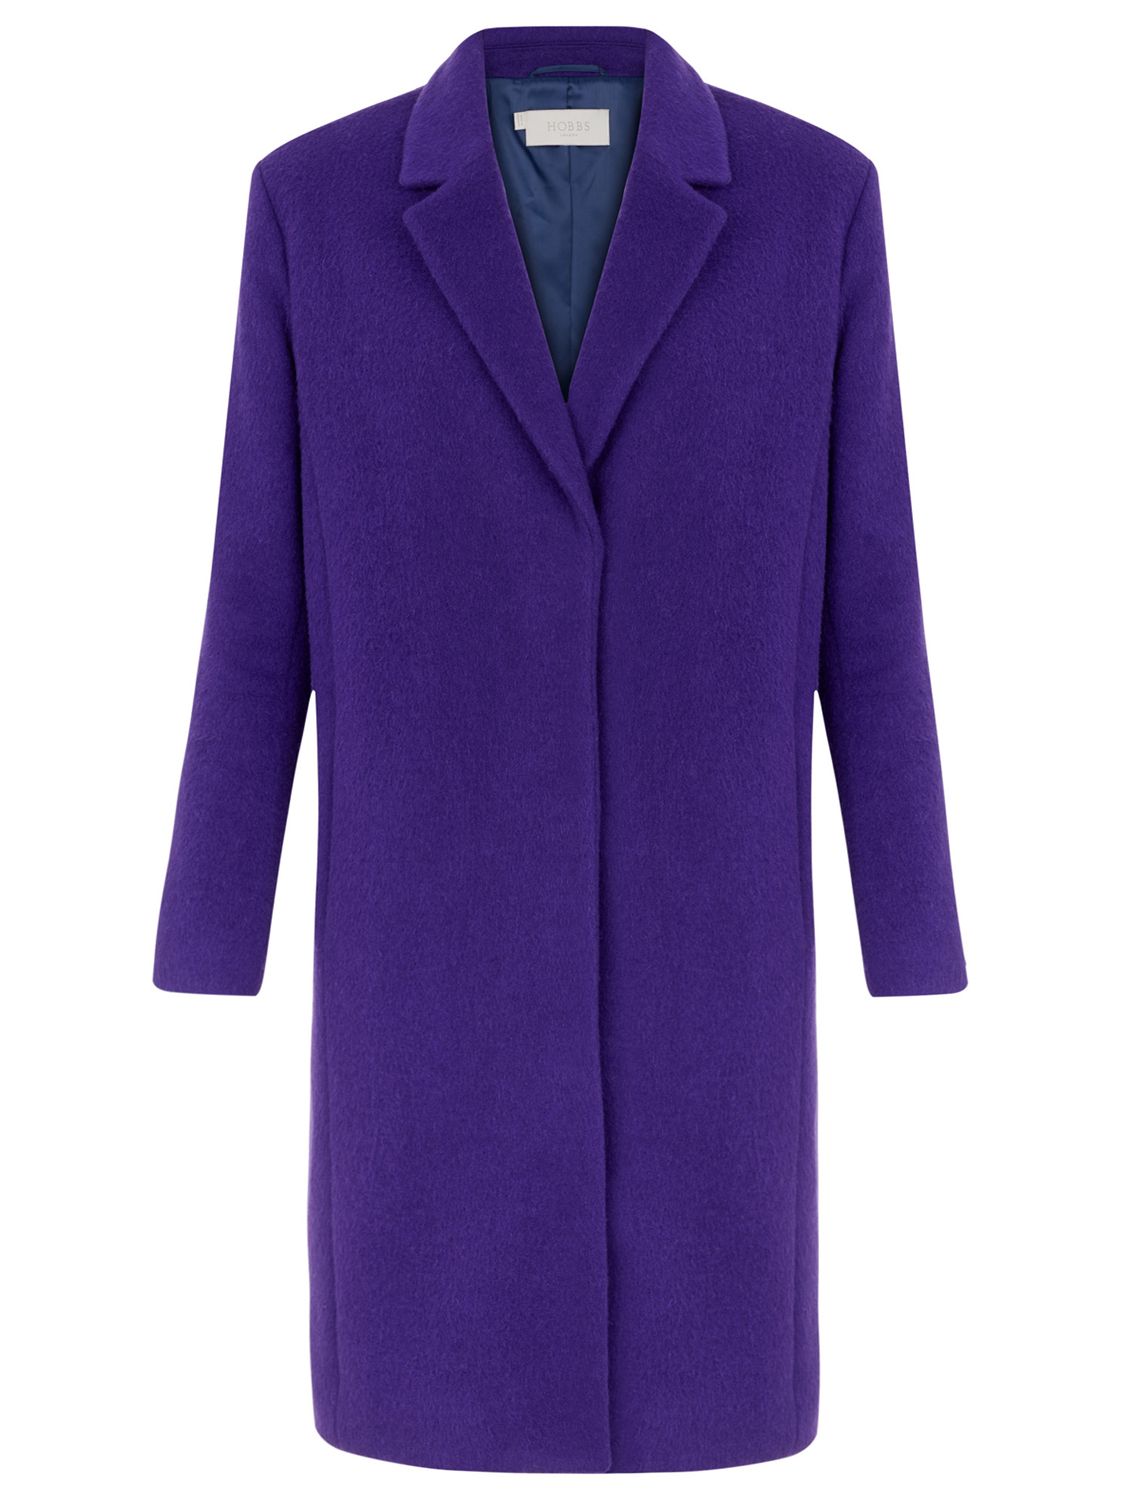 Hobbs Maddie Coat, Purple